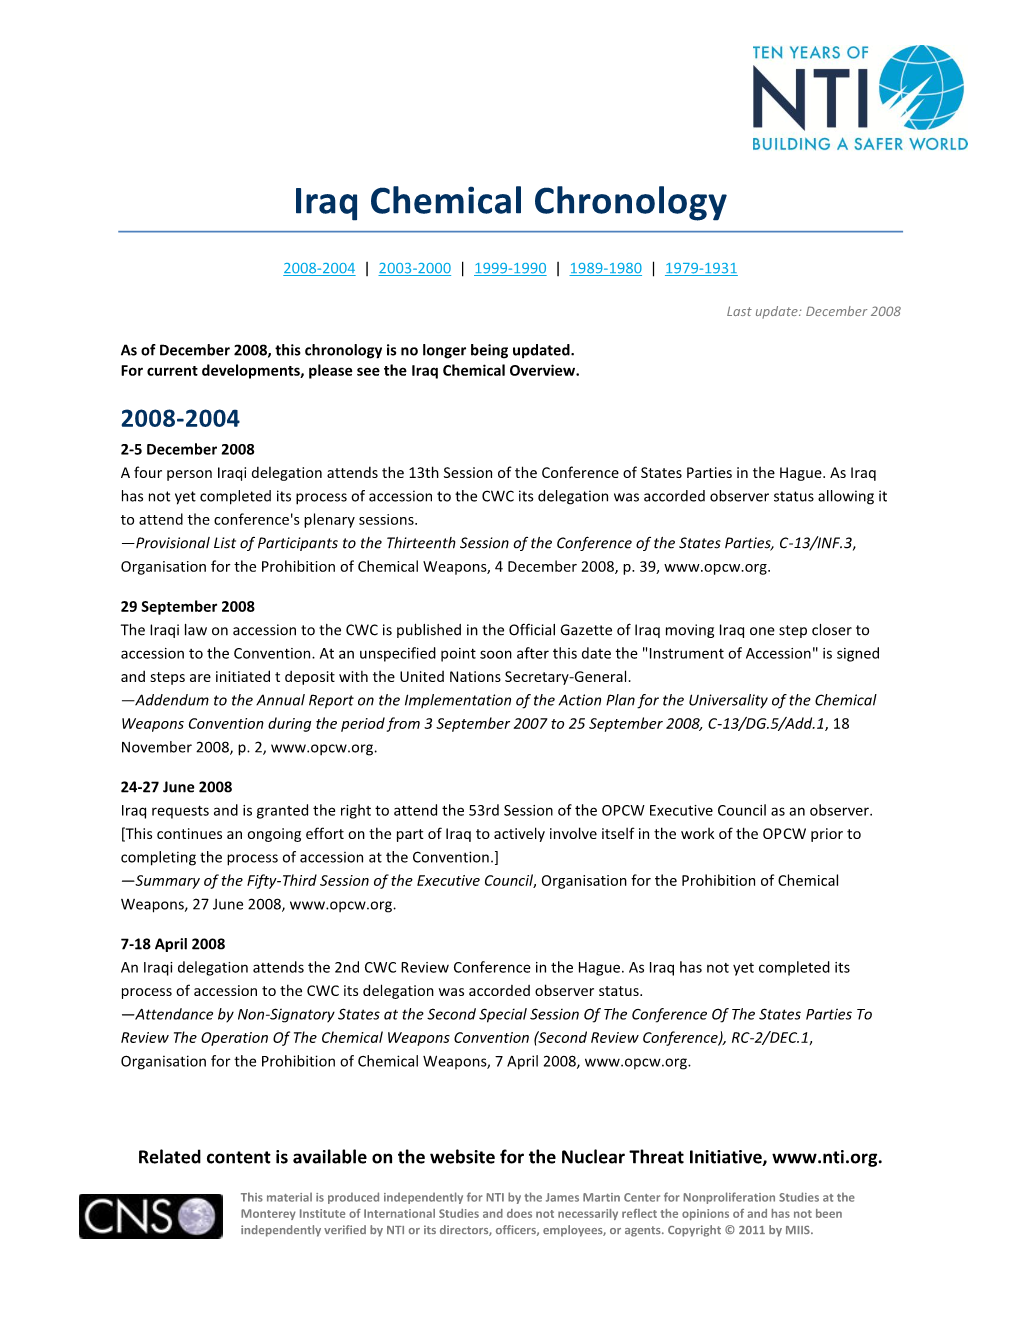 Iraq Chemical Chronology